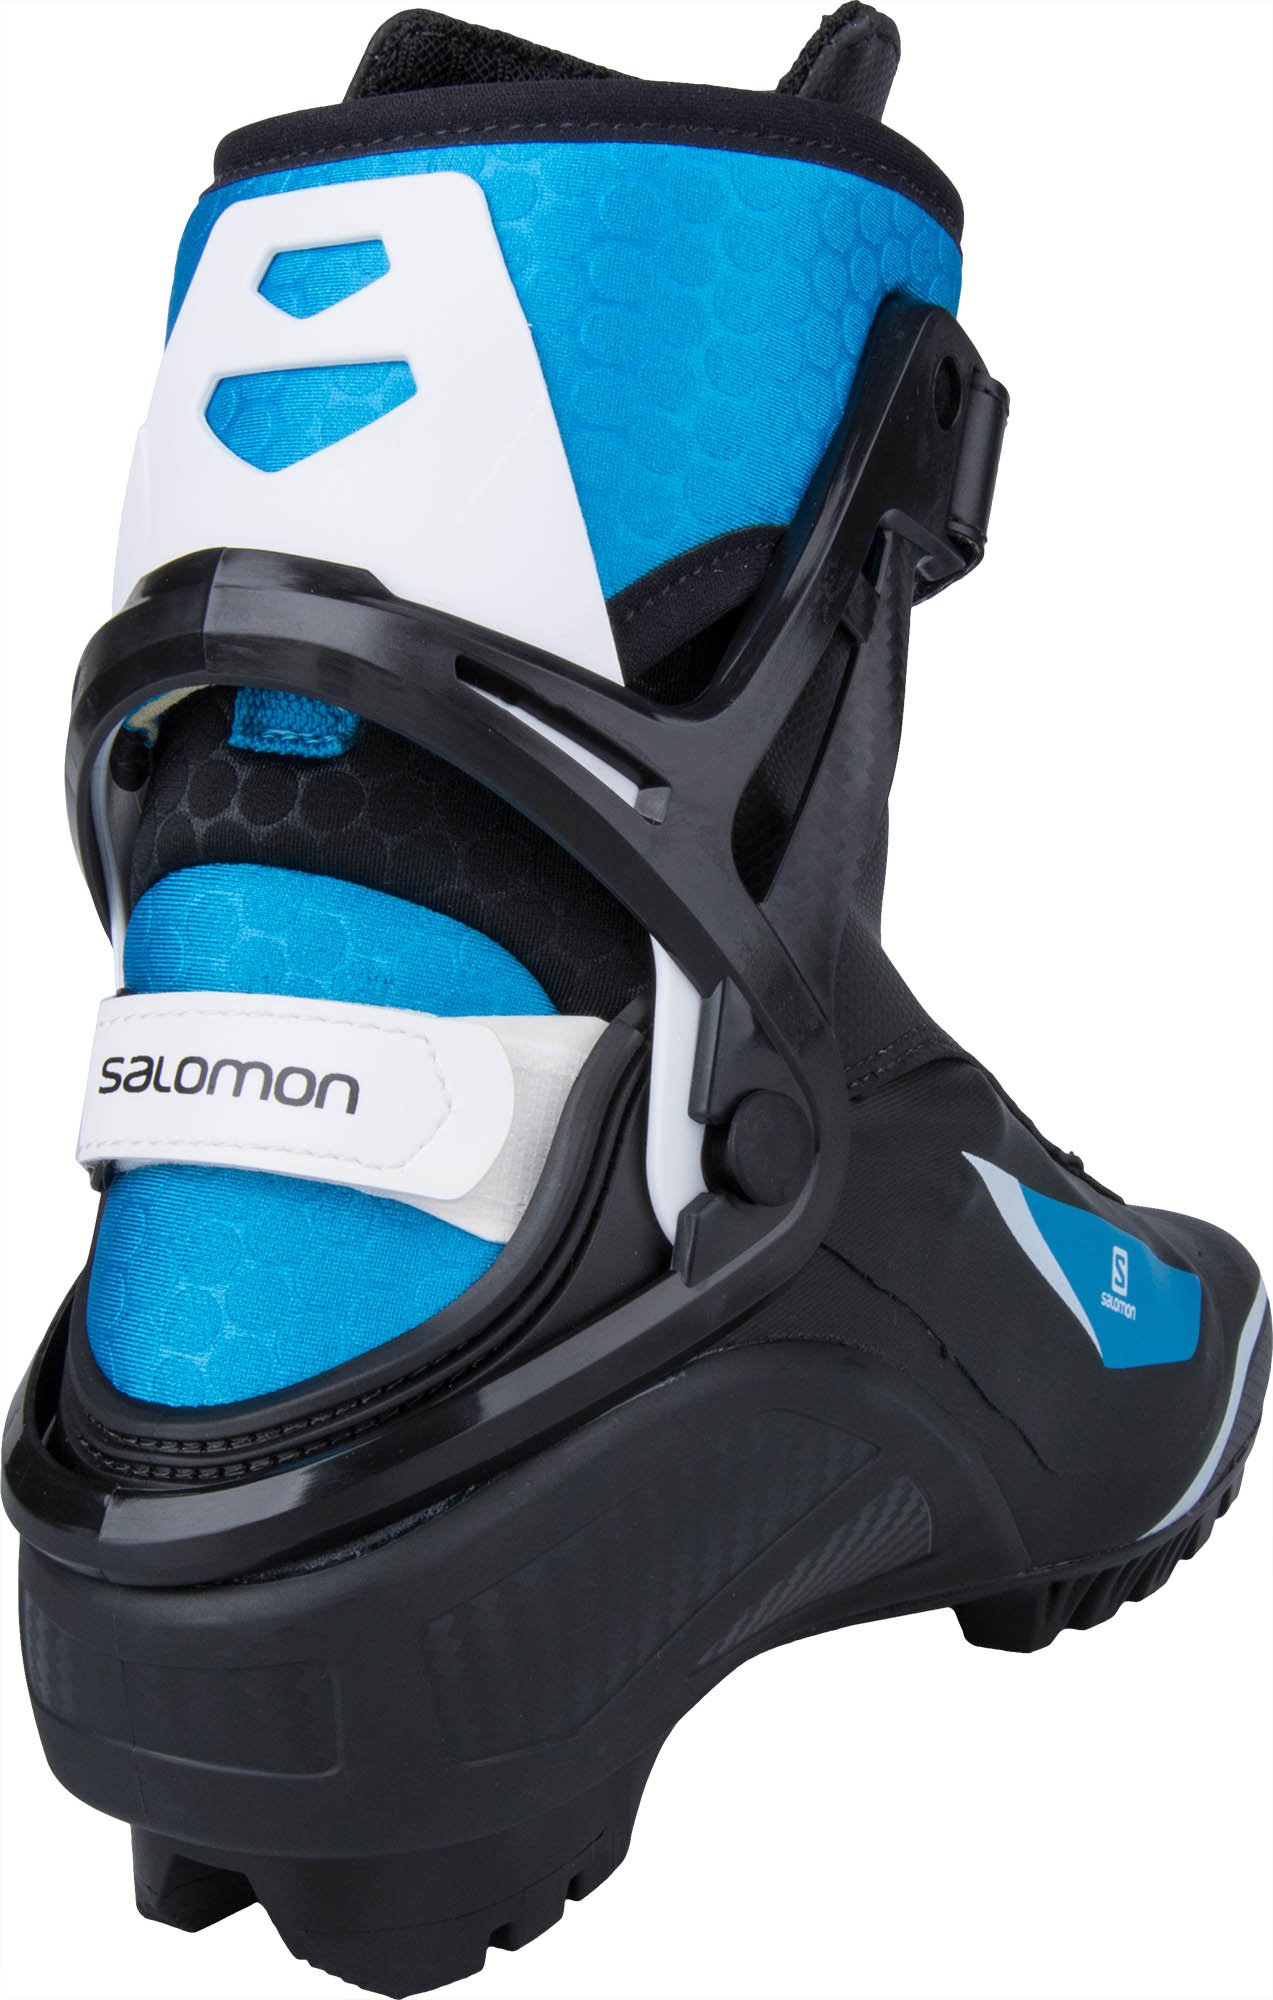 Men’s skating ski boots